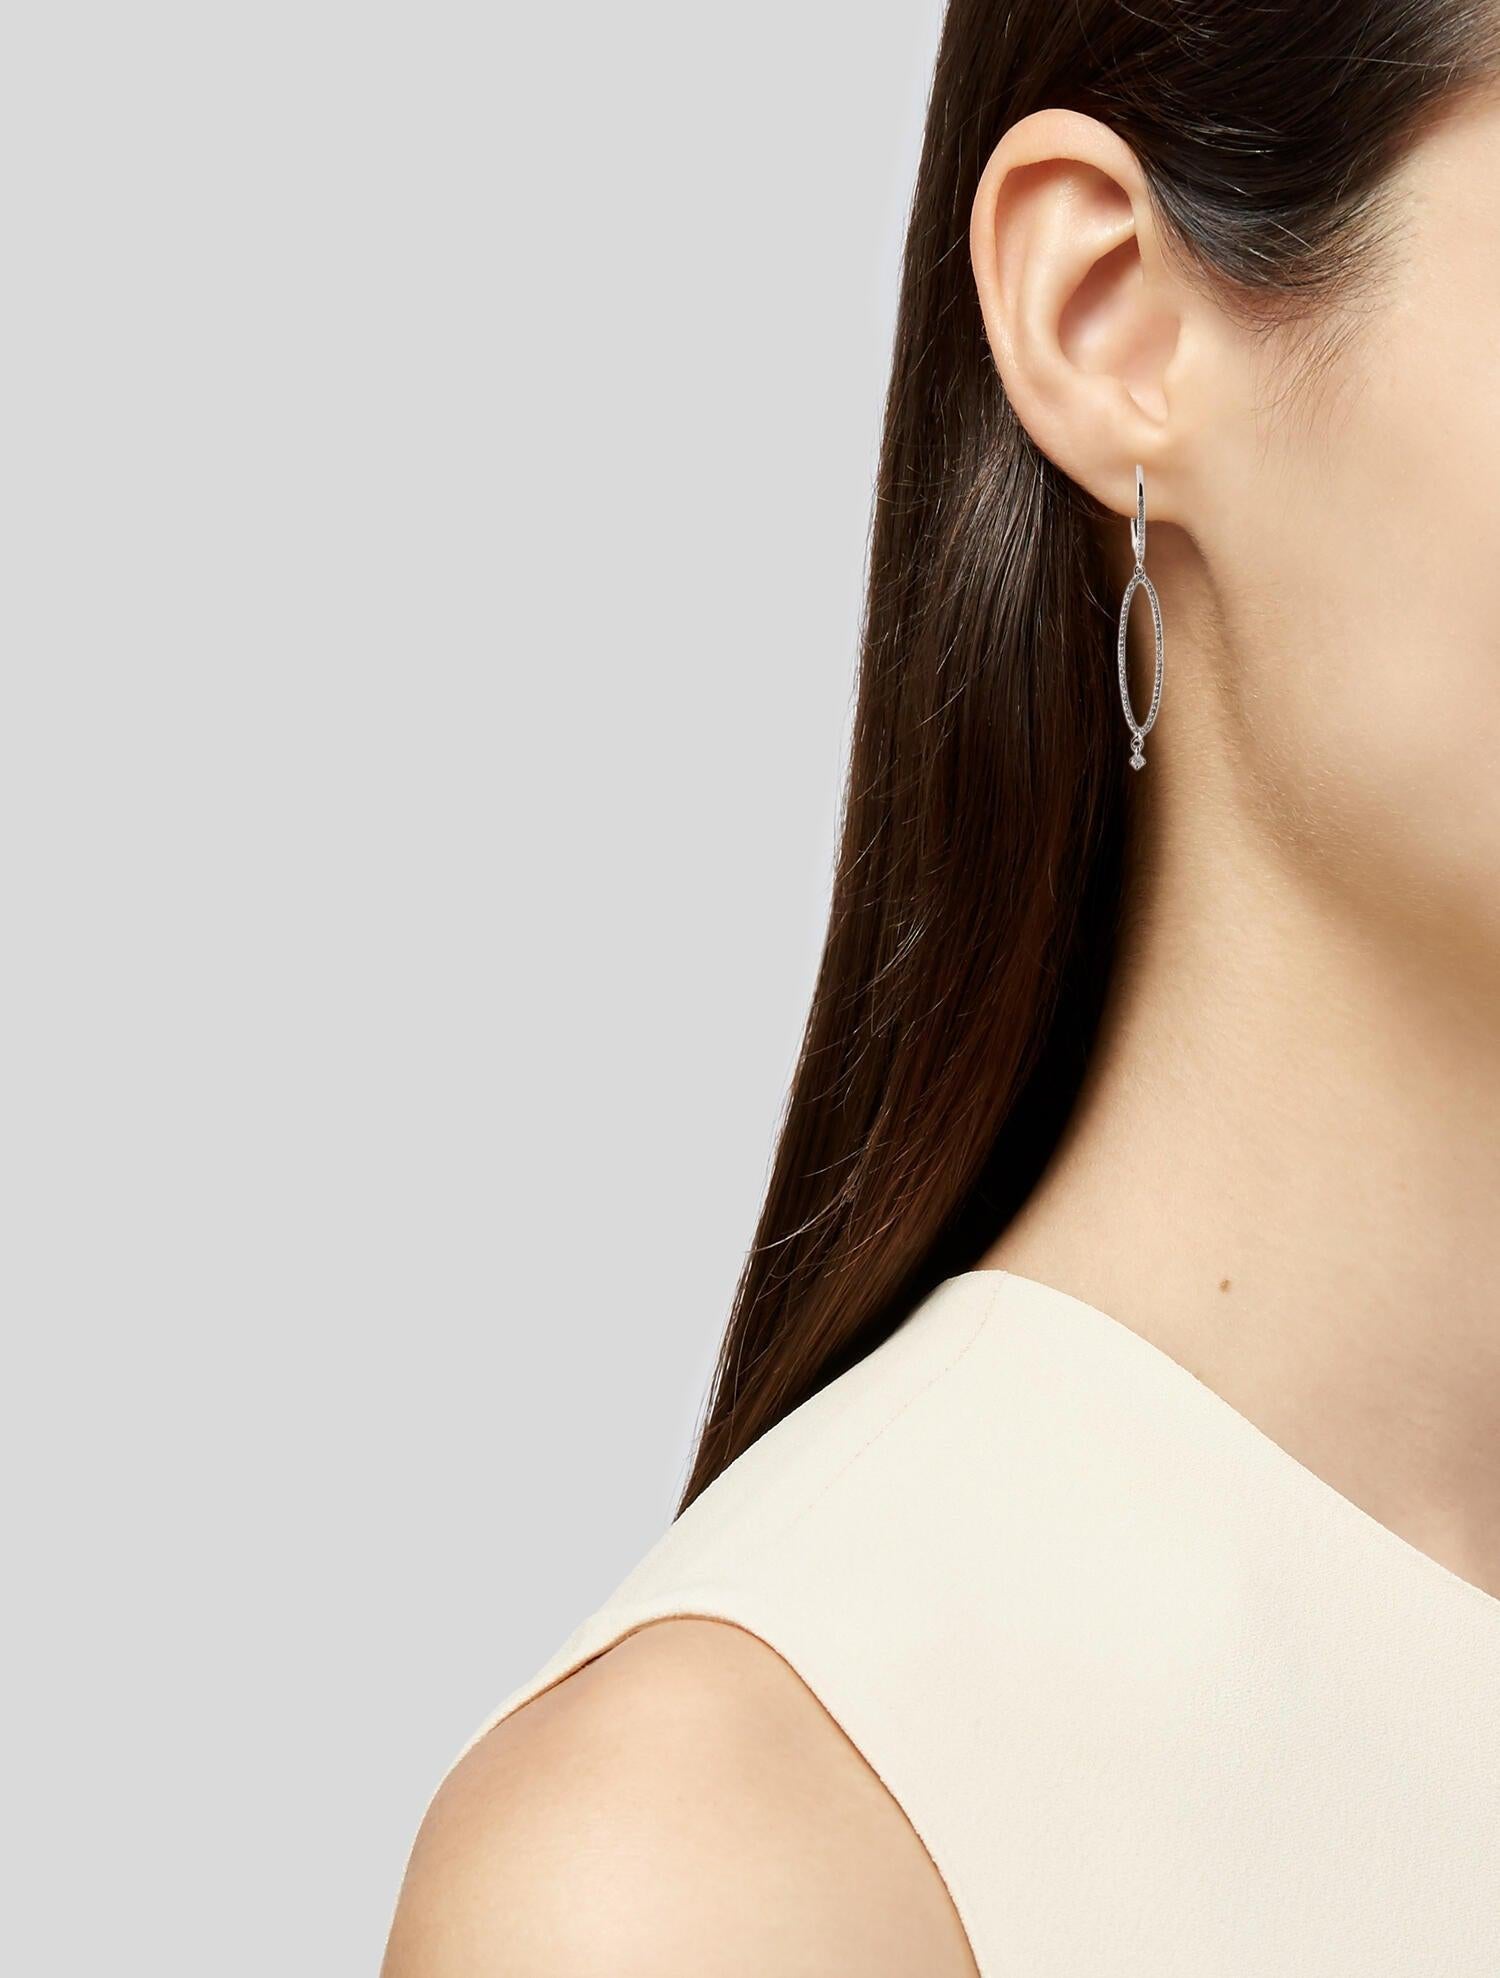 14K Diamond Drop Earrings - Exquisite Sparkle, Timeless Glamour, Elegant Design For Sale 1